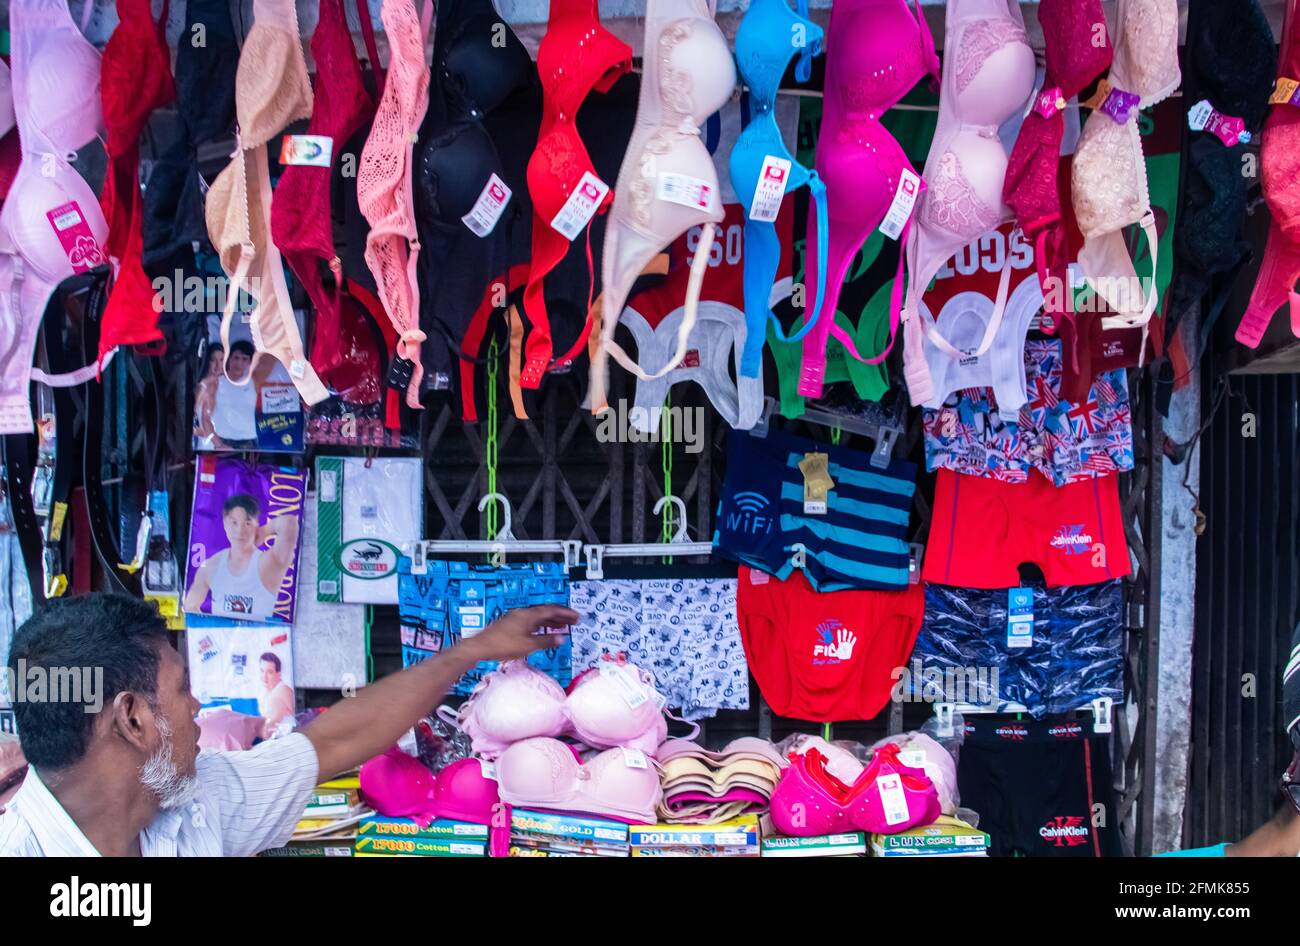 Bra shop display in the market, I captured this image Chak Bazar